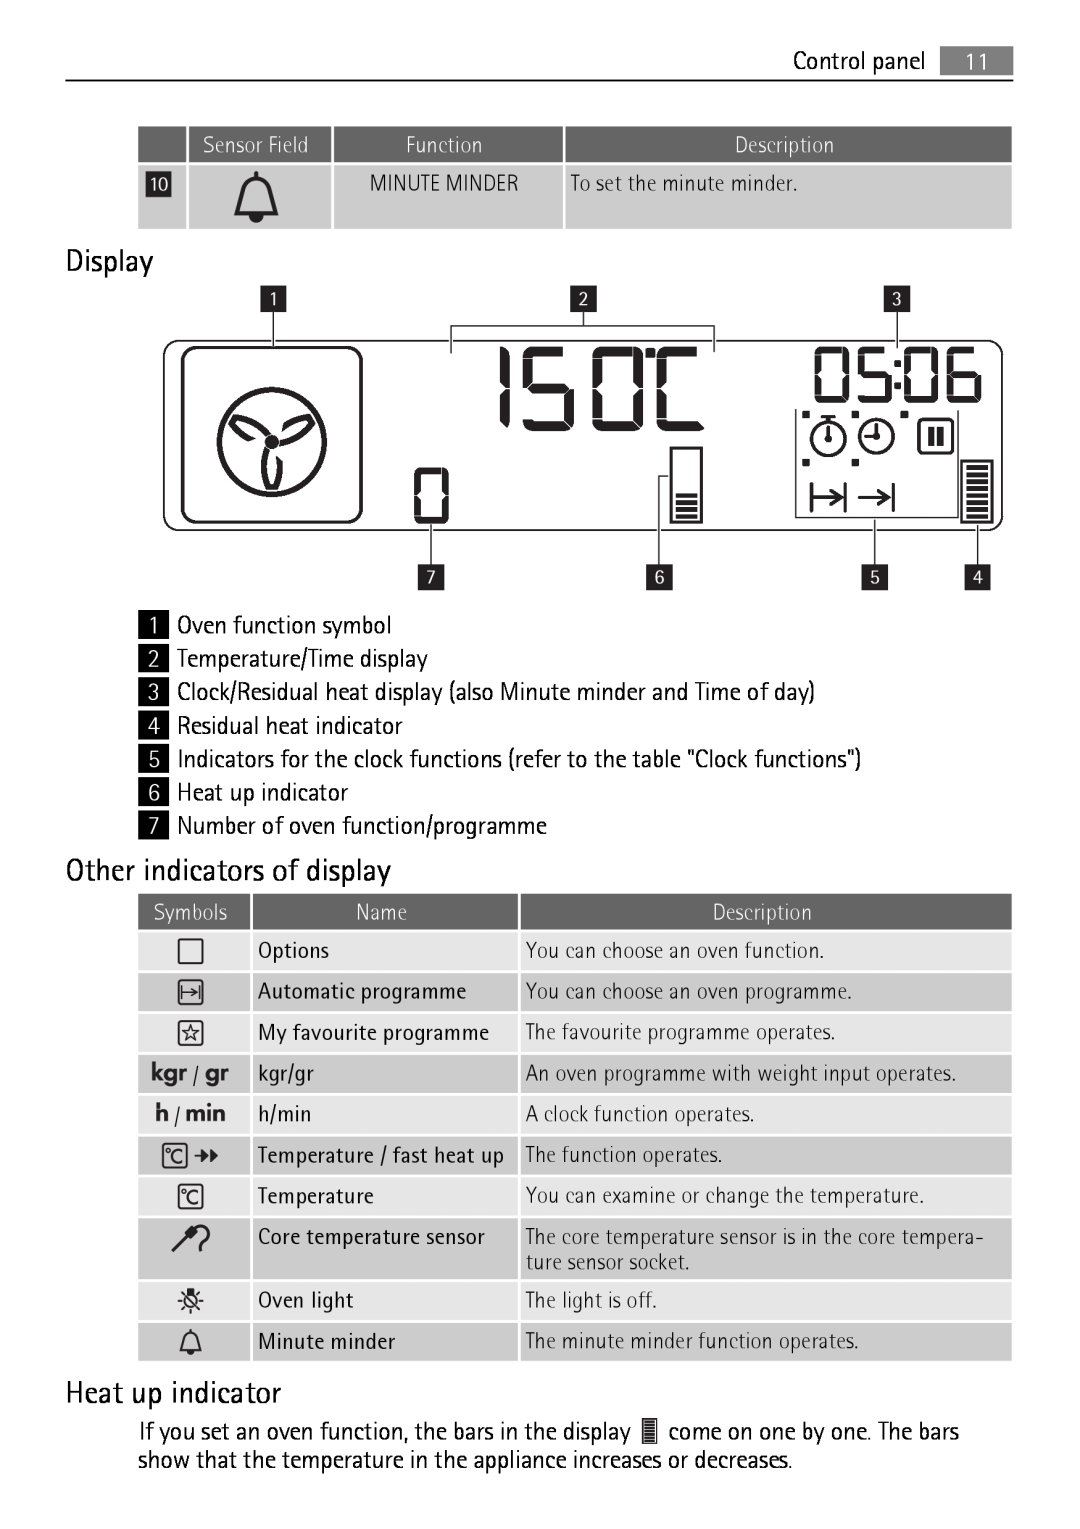 AEG BS7304001M Display, Other indicators of display, Heat up indicator, Sensor Field, Function, Description, Symbols, Name 